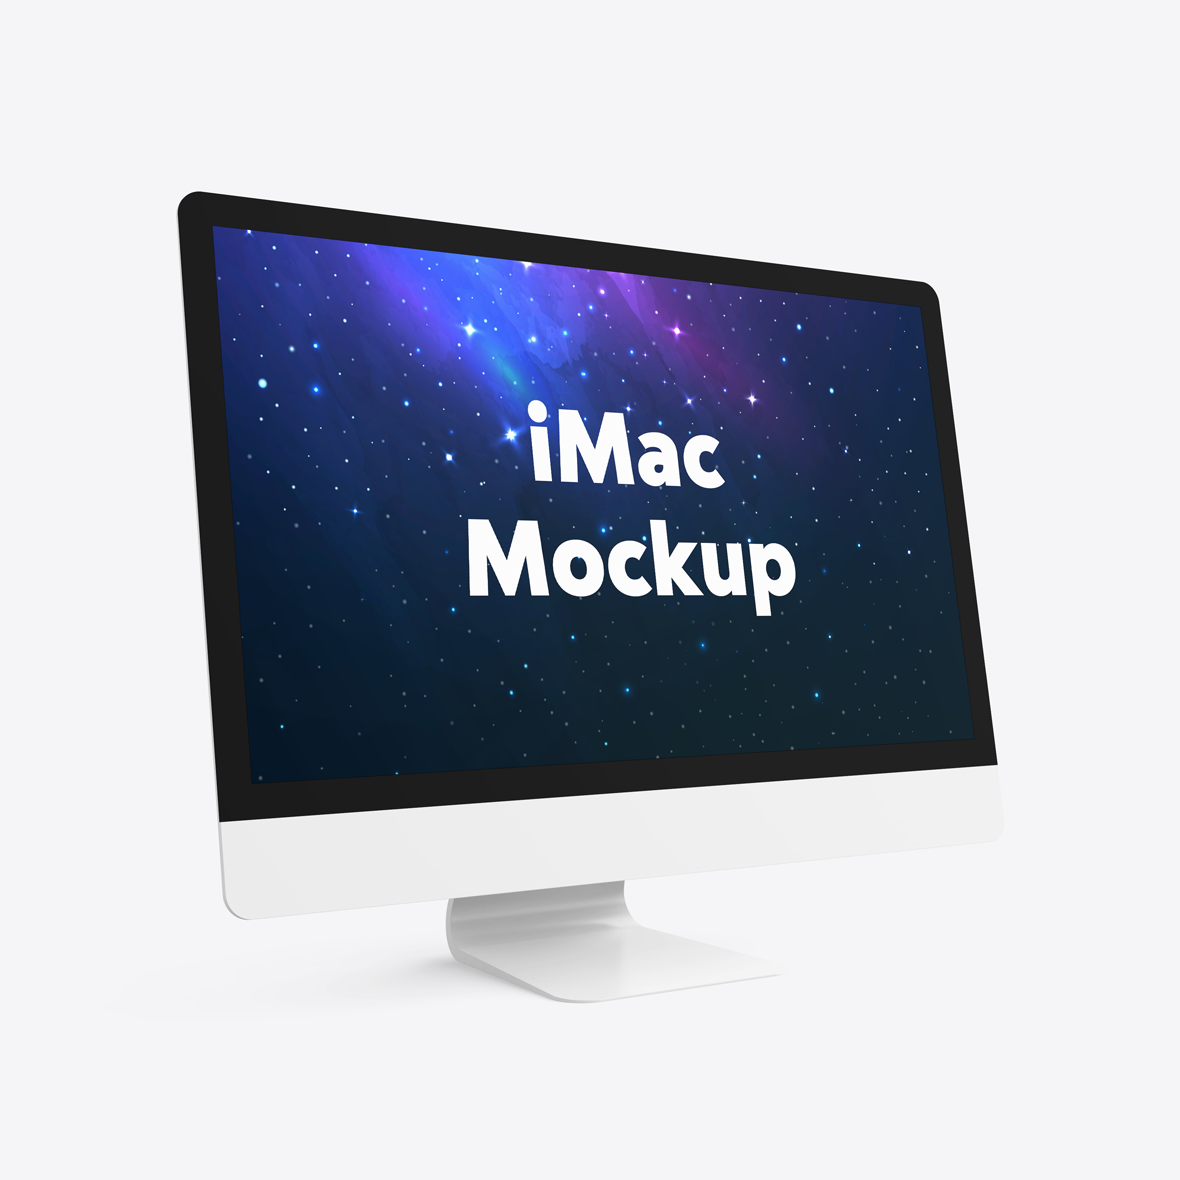 iMac Mockup